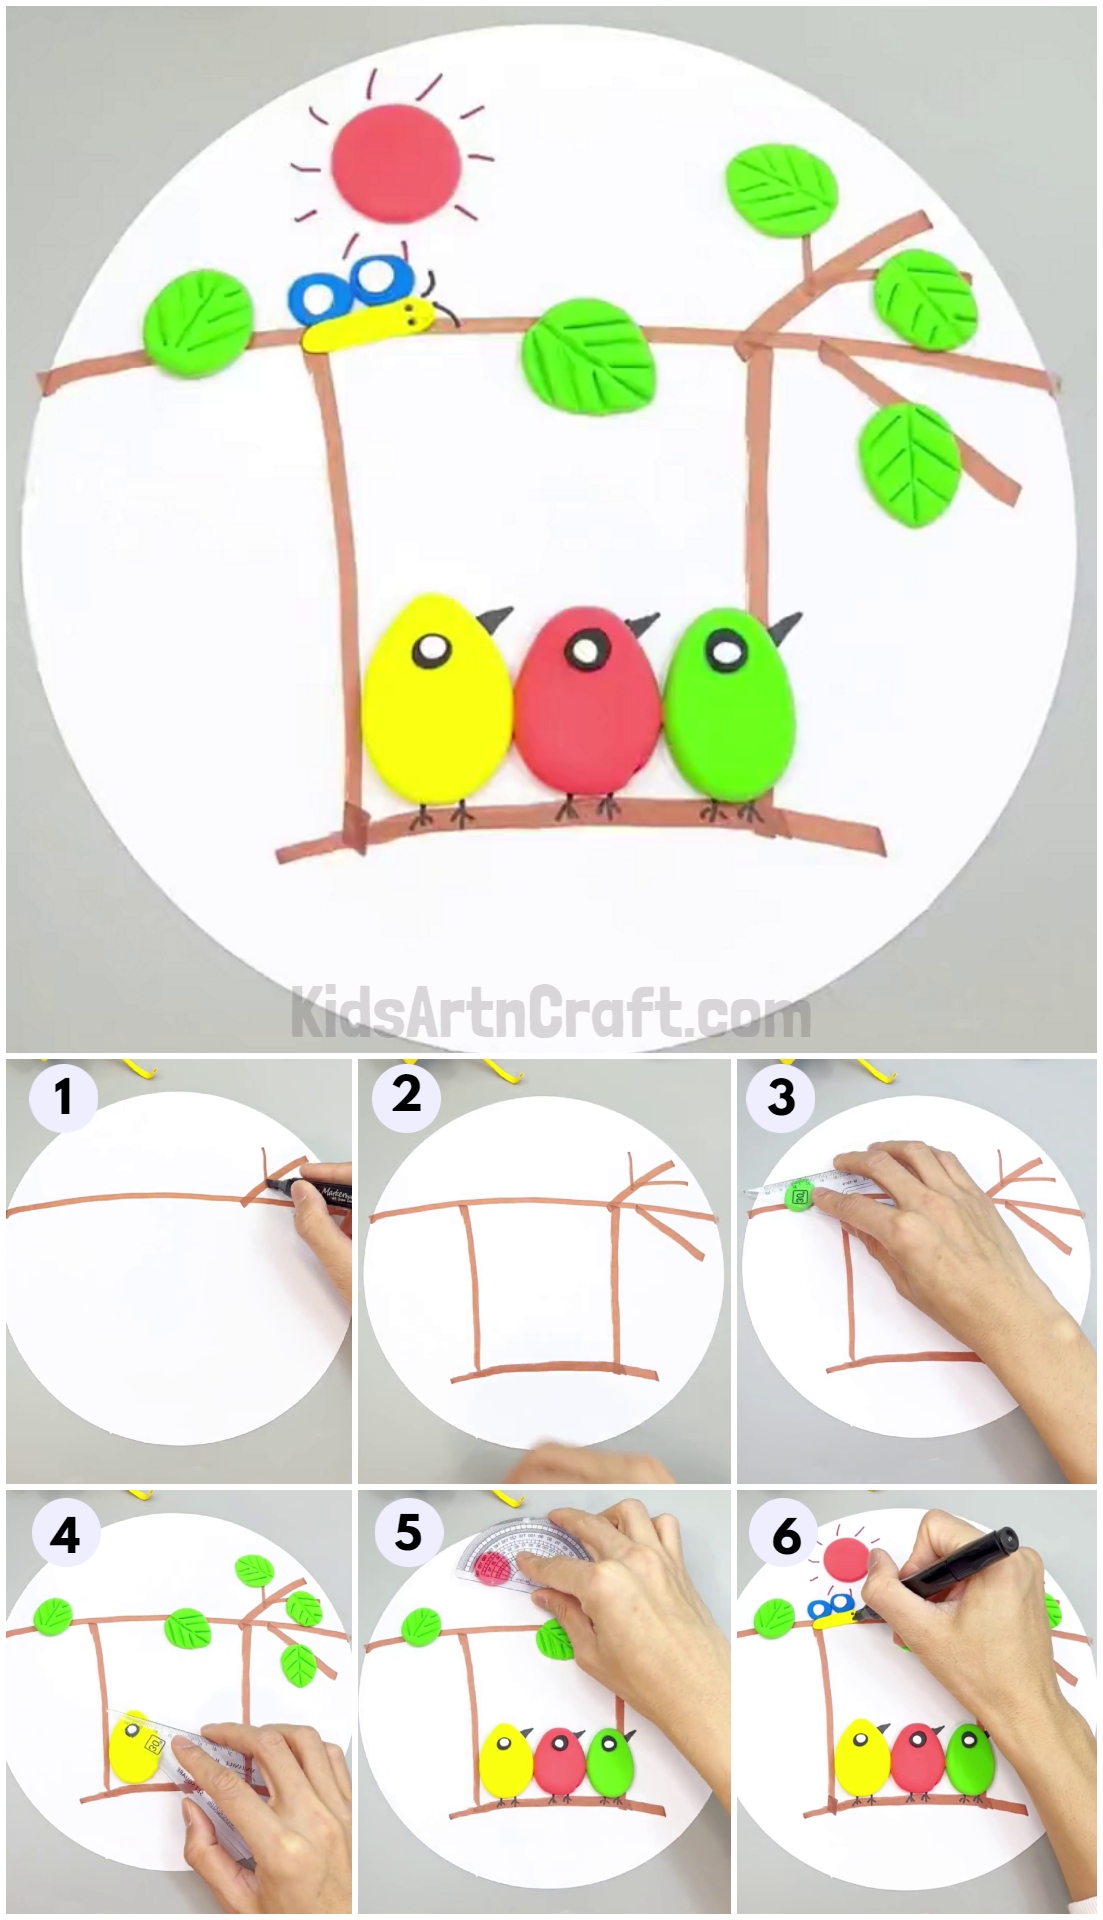 How to Make a Clay Bird Easy Artwork